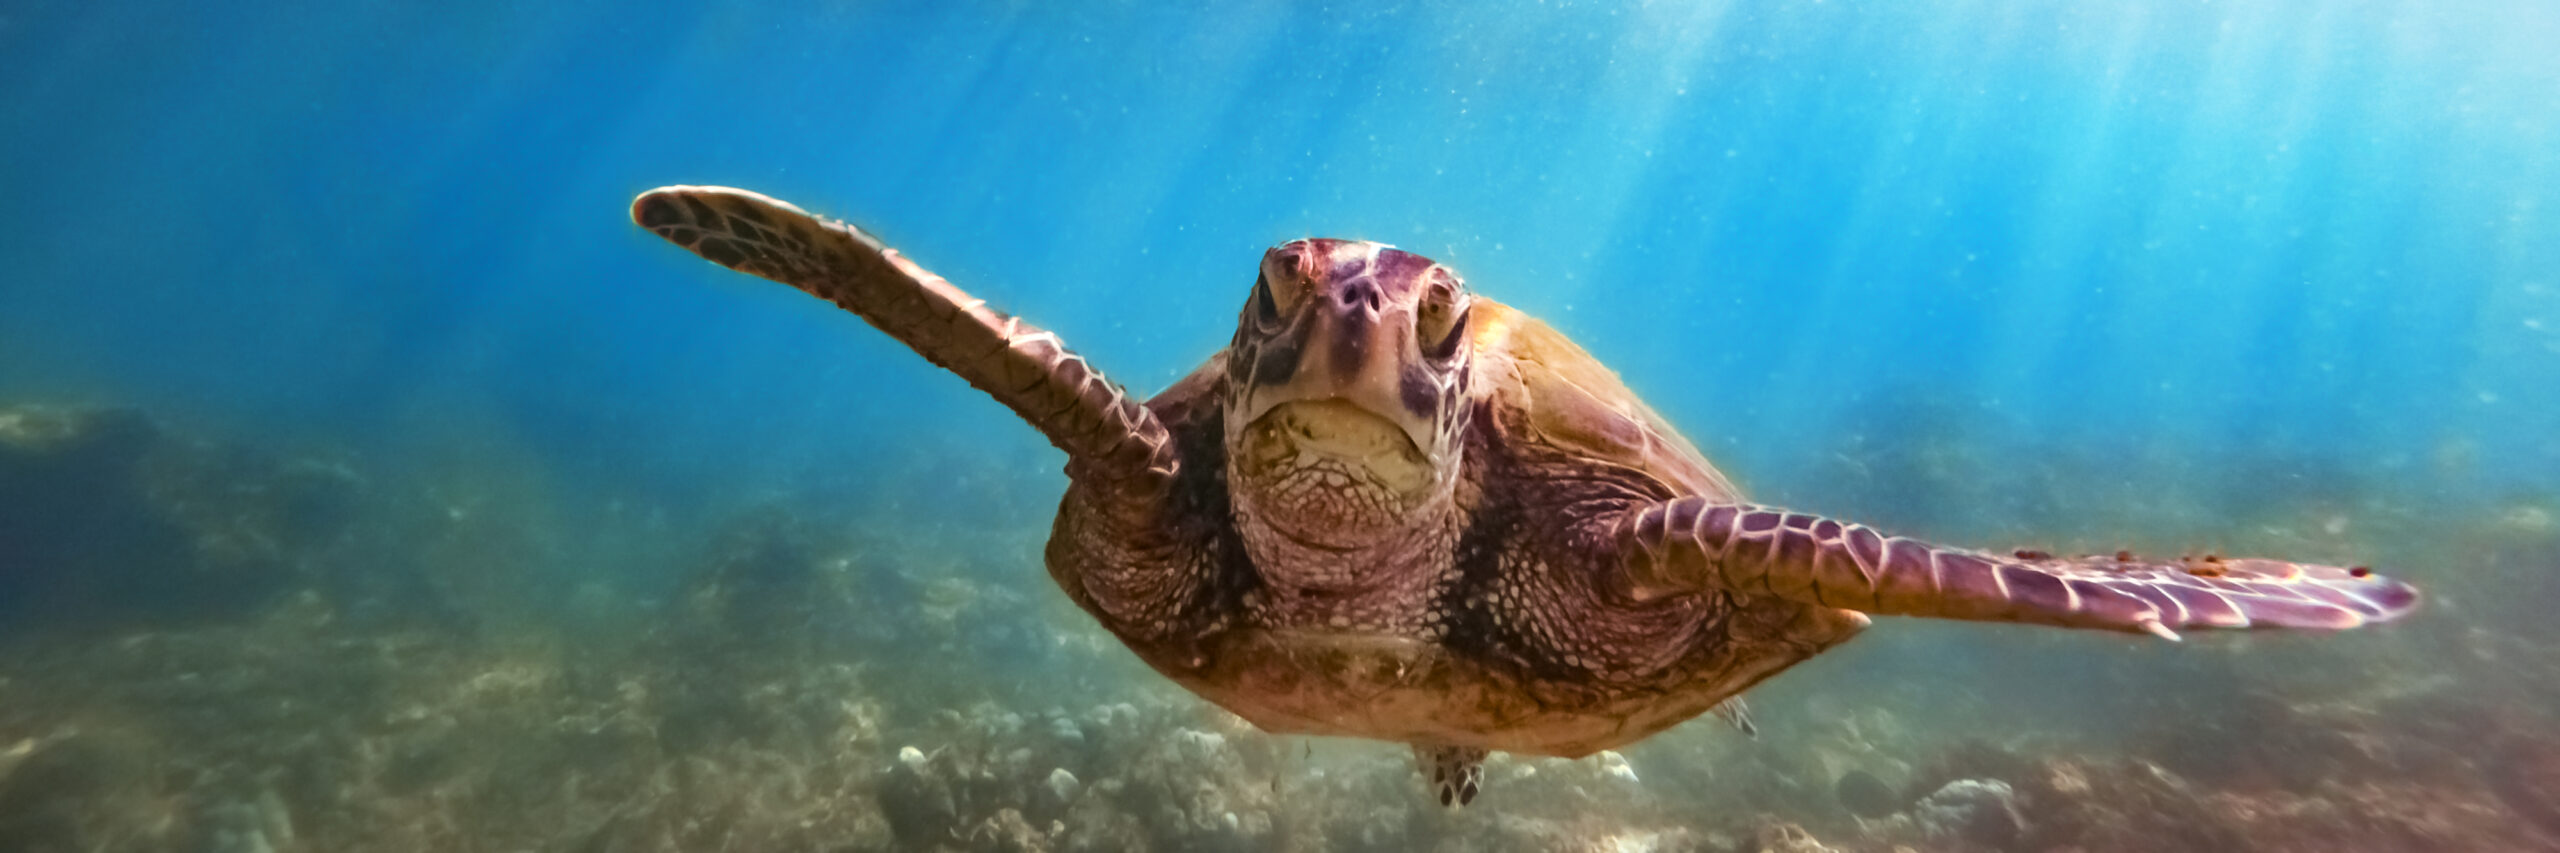 protect sea turtles